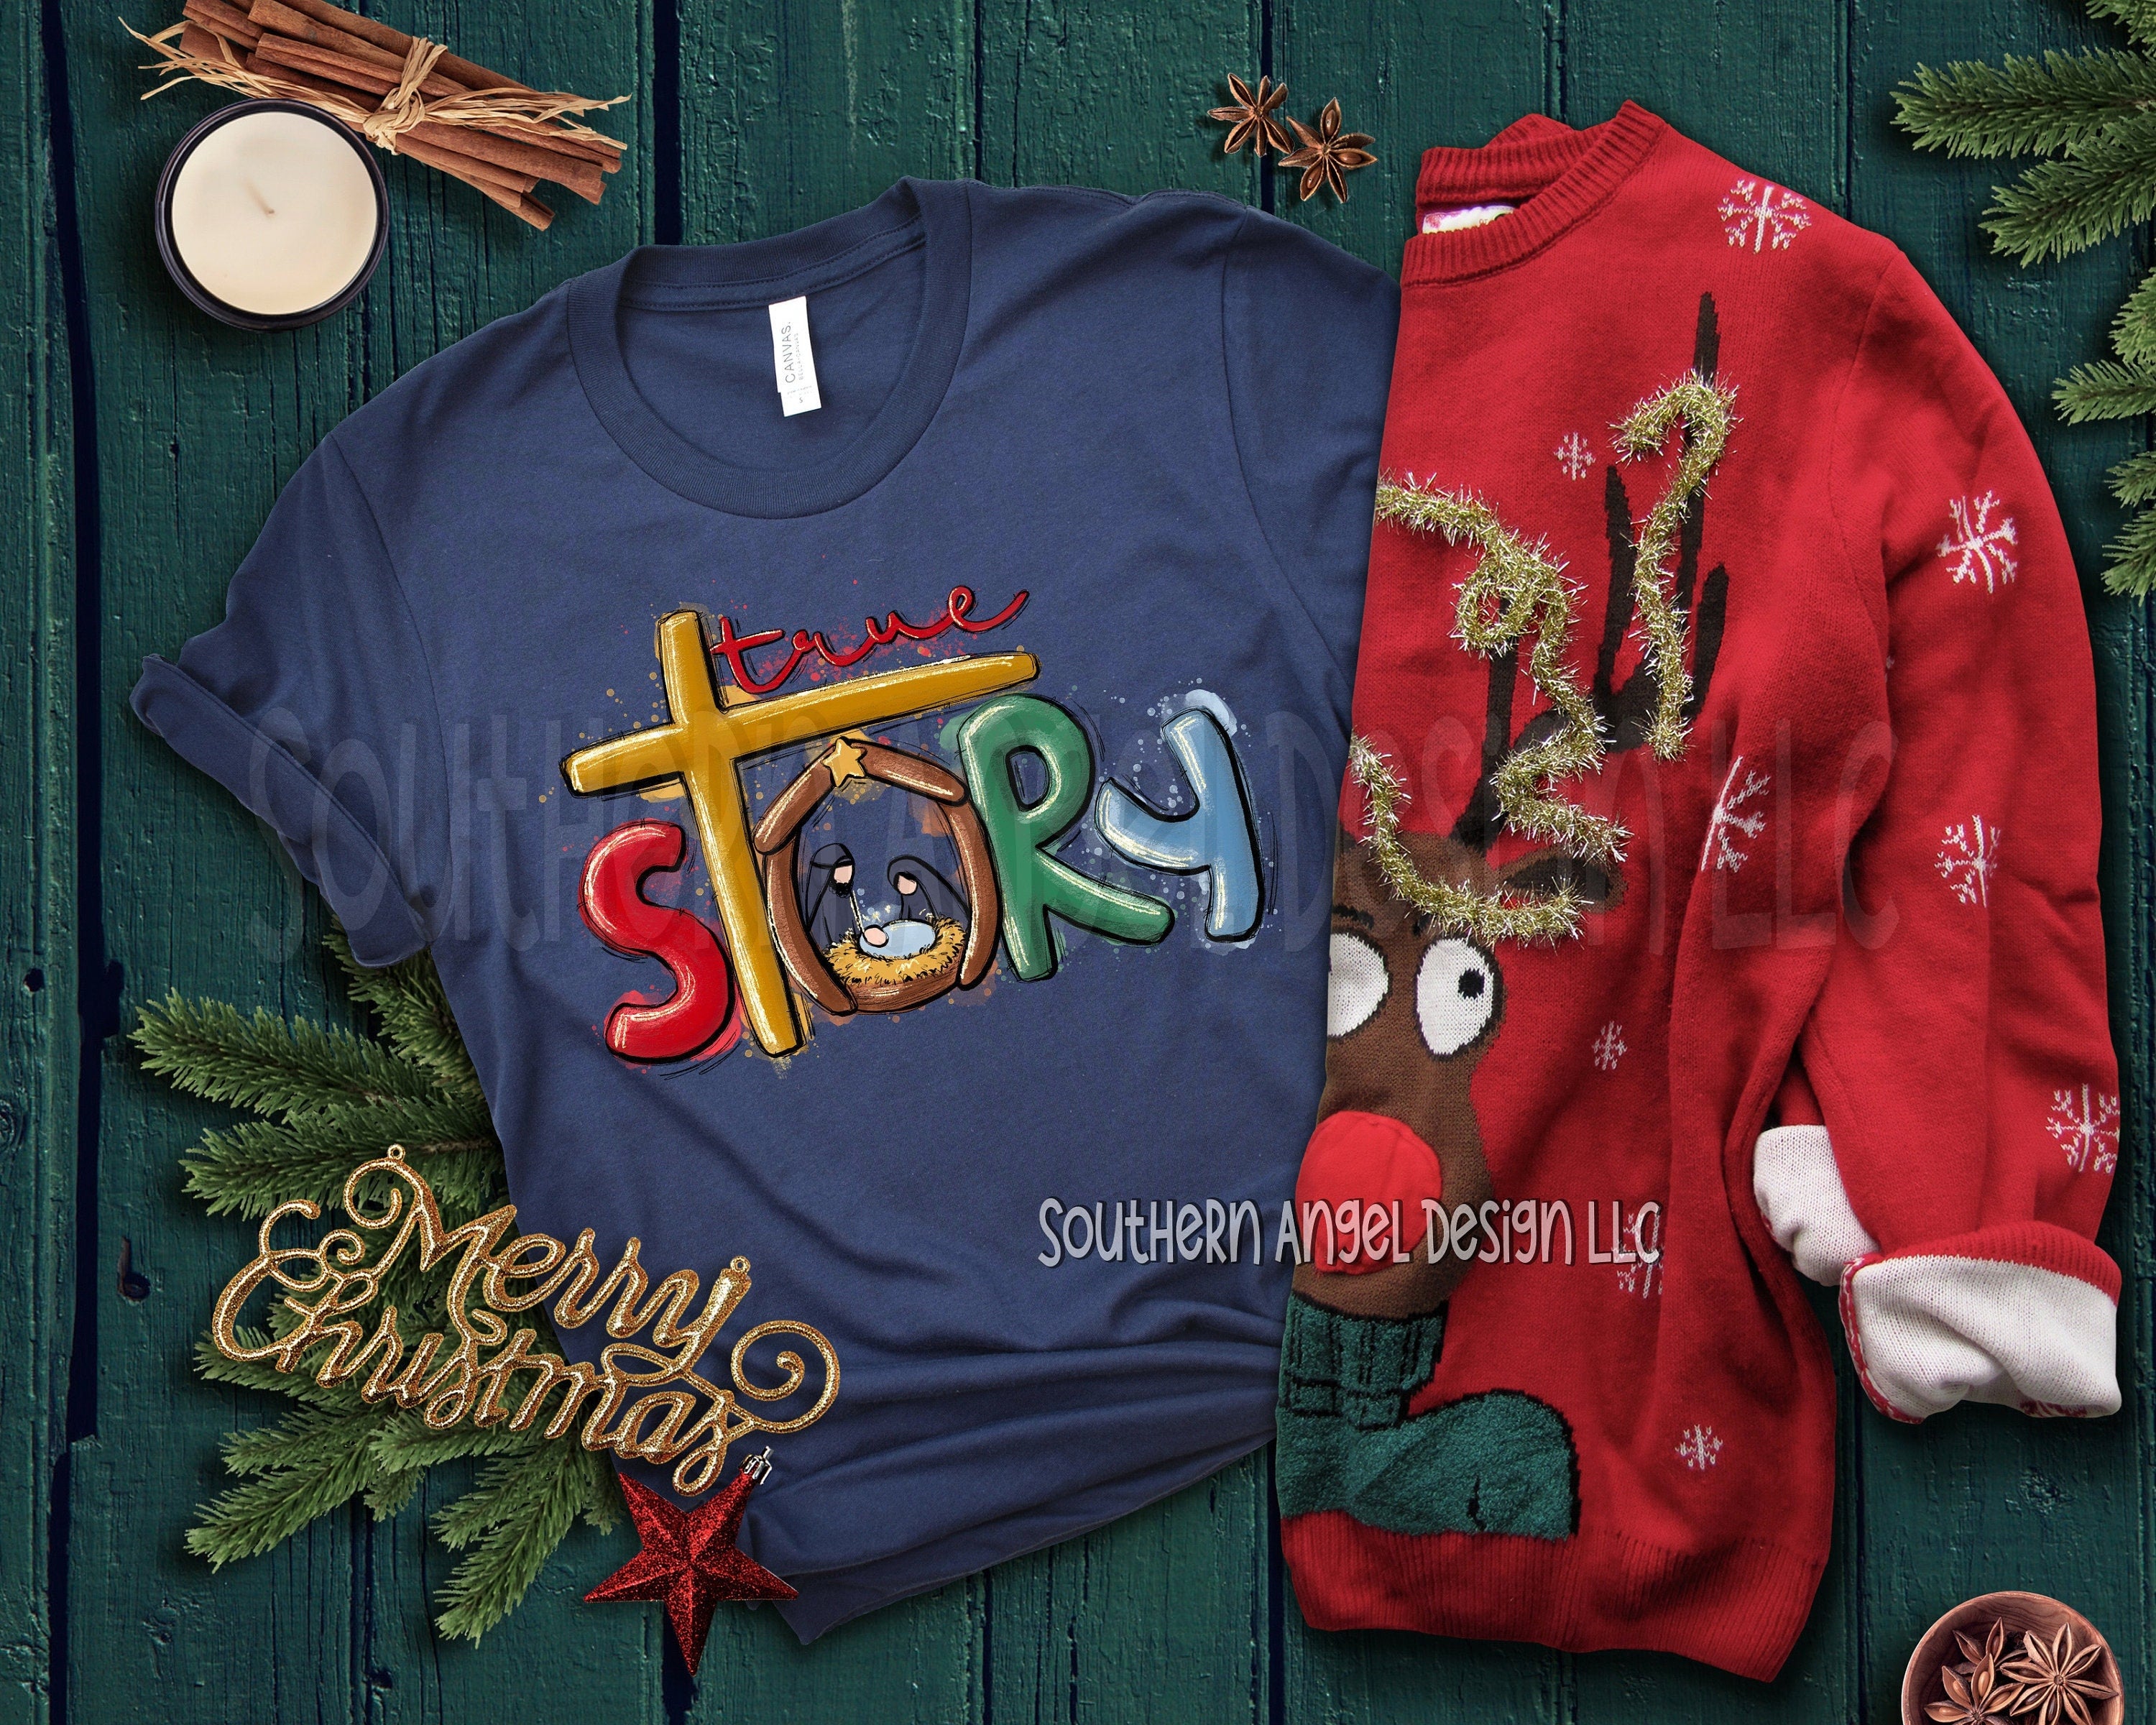 True Story Christmas shirt, Christmas Shirts for Women, Christmas Tee, Christmas TShirt, Shirts For Christmas, Cute Christmas Shirts, Holida